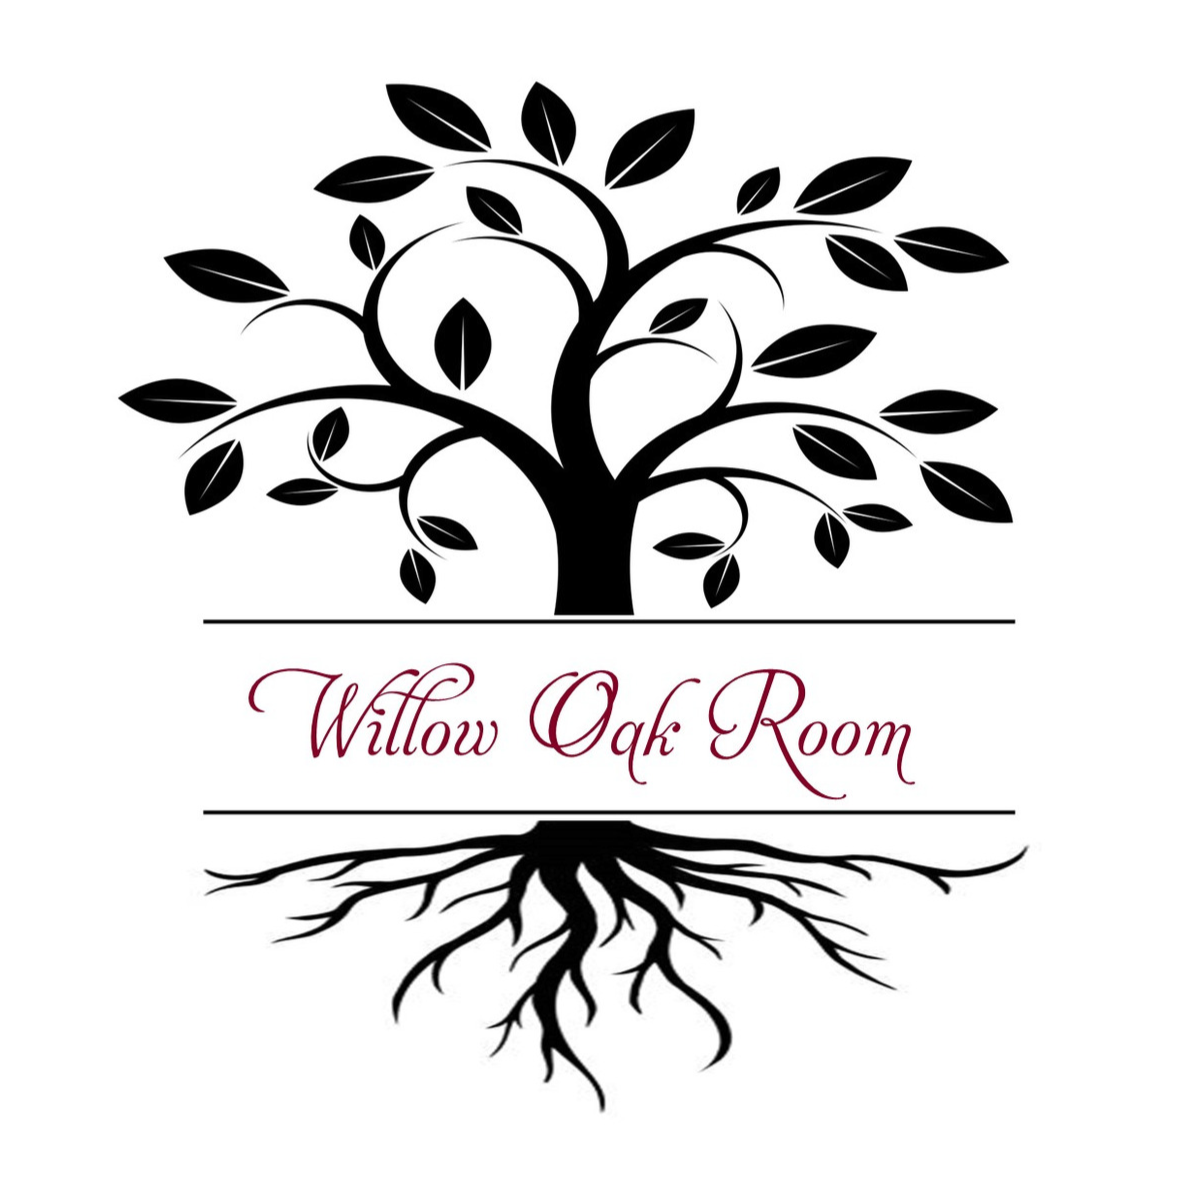 Willow Oak Room Logo - Edited